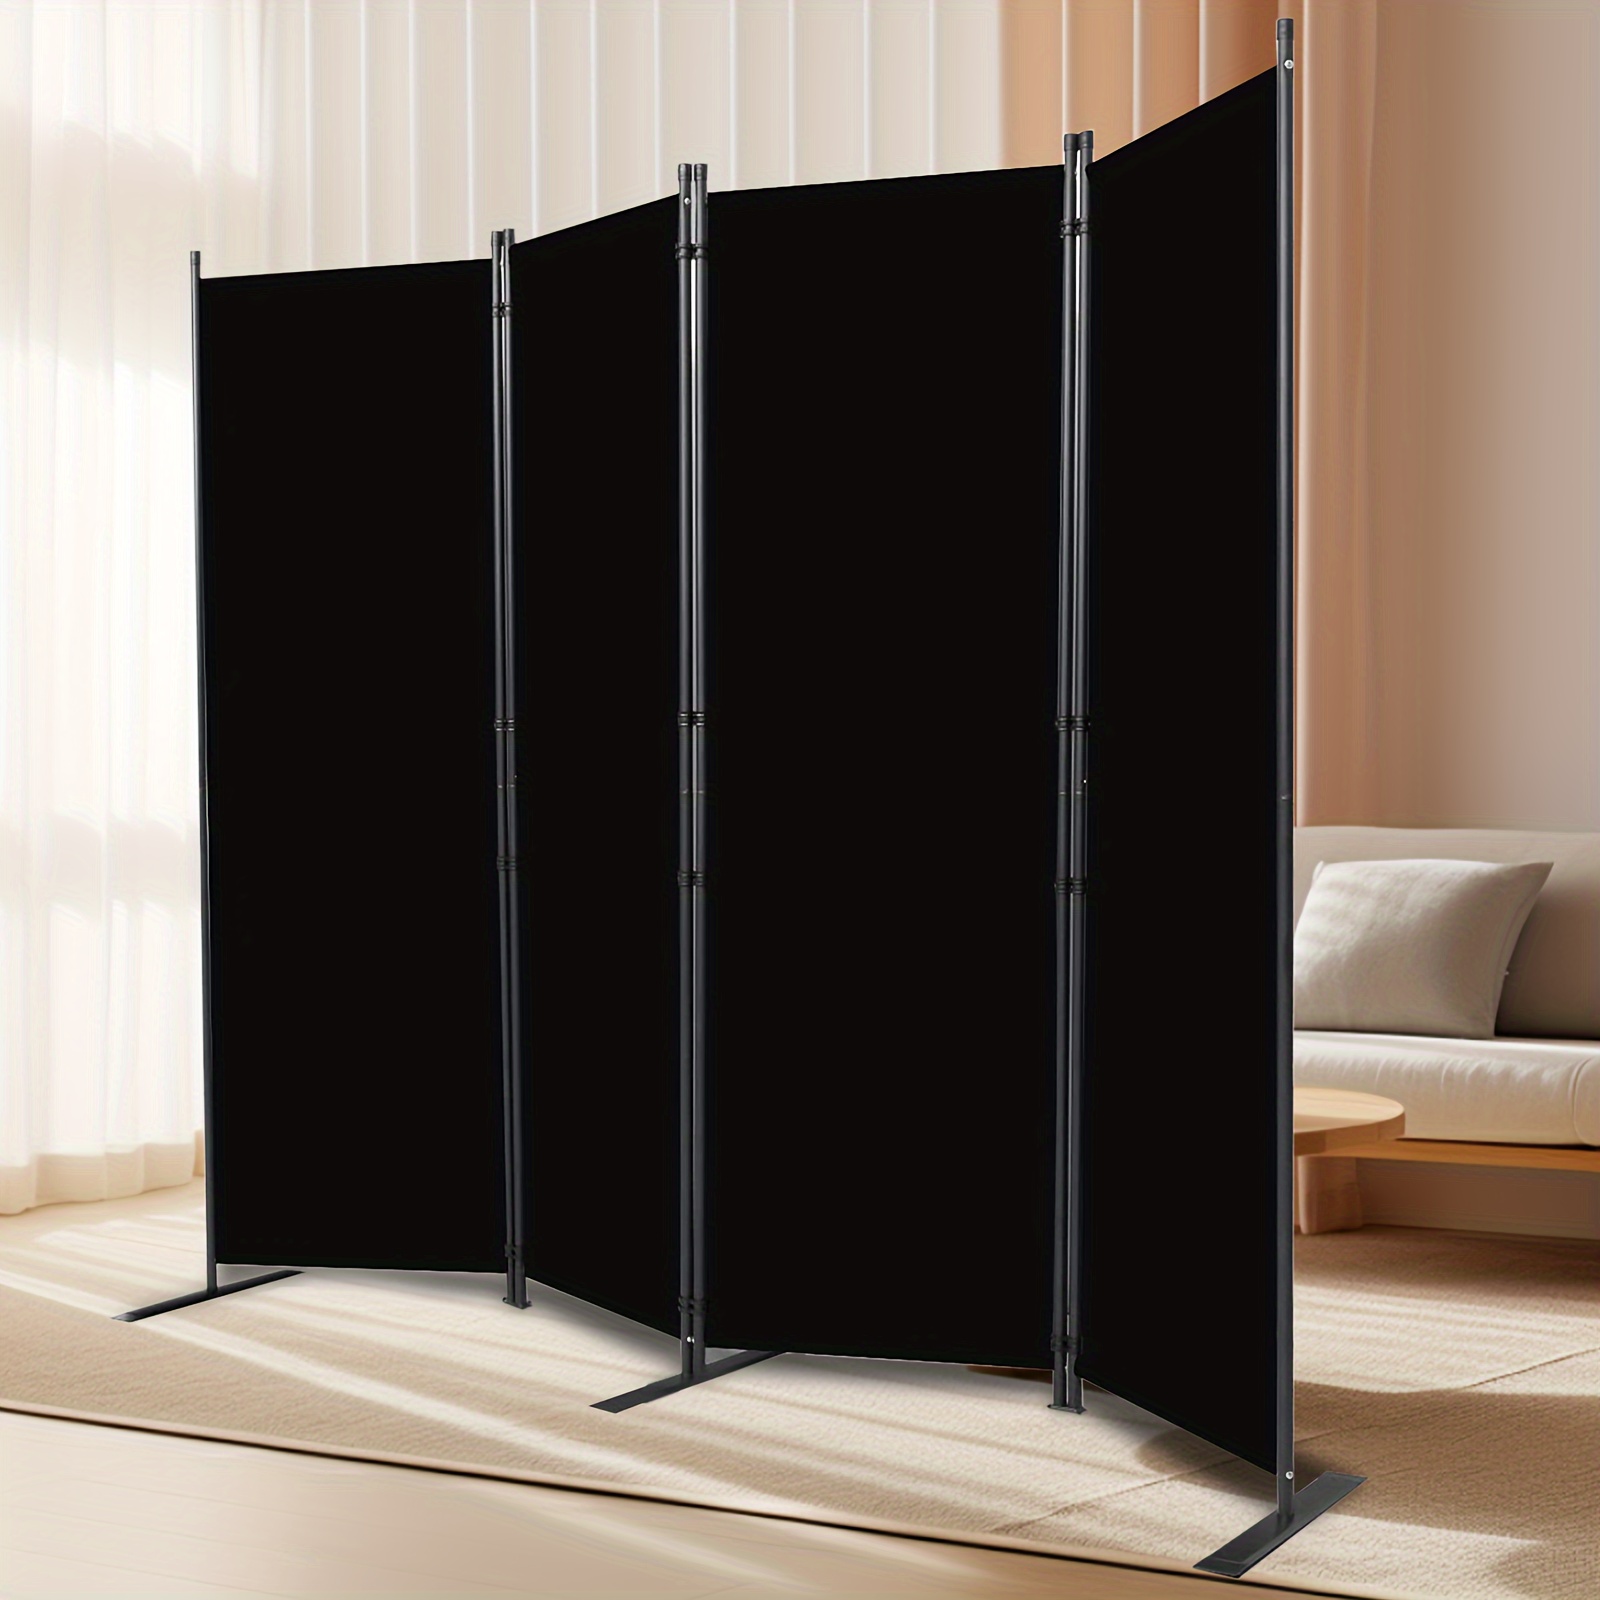 

Room Divider, Large Single Panel Privacy Screen Wall Divider For Room Separation, Freestanding Black Room Divider 72"h×71"w